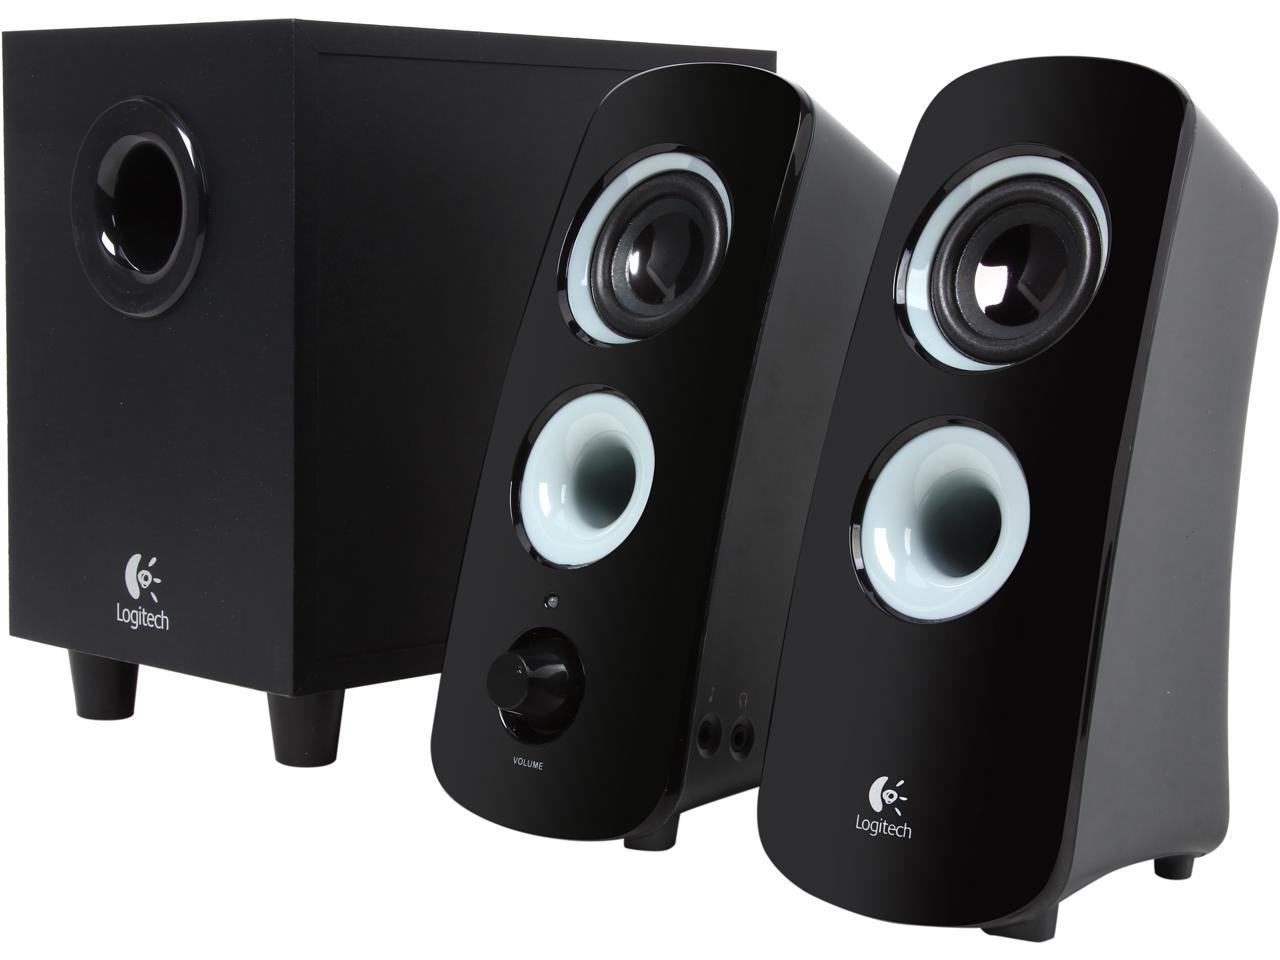 Olgun özendirici aldatma  Logitech Z323 Replacement Speaker Flash Sales, 60% OFF | www.gruposincom.es